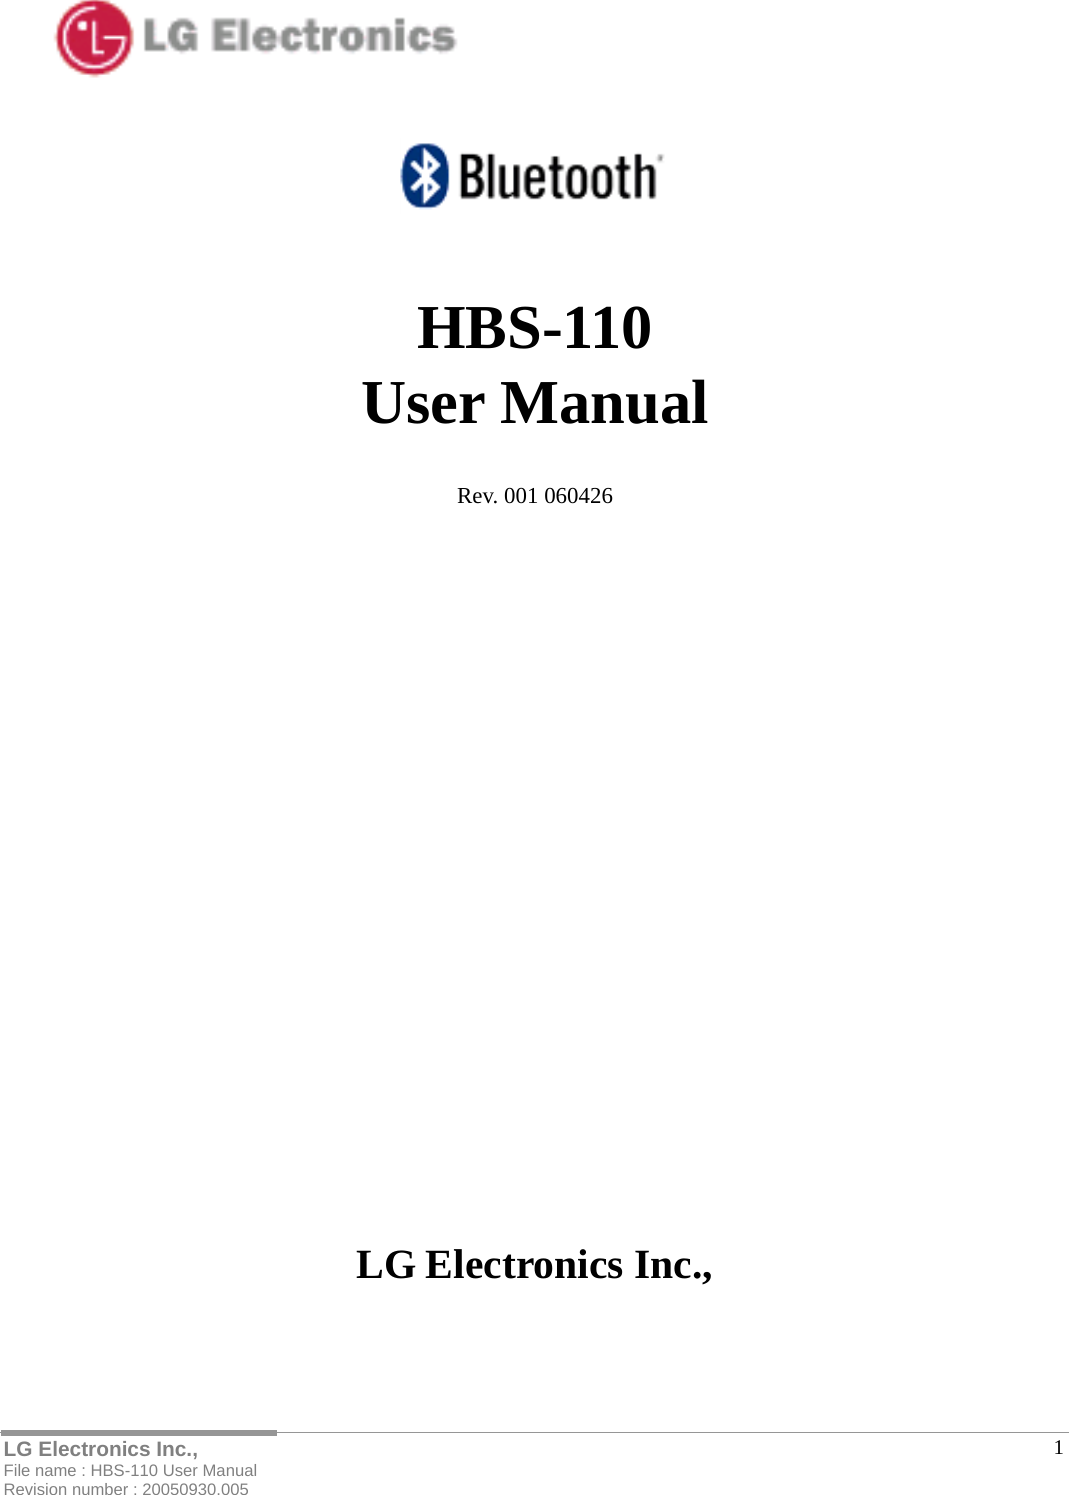   LG Electronics Inc., File name : HBS-110 User Manual Revision number : 20050930.005  1   HBS-110 User Manual  Rev. 001 060426                    LG Electronics Inc.,    